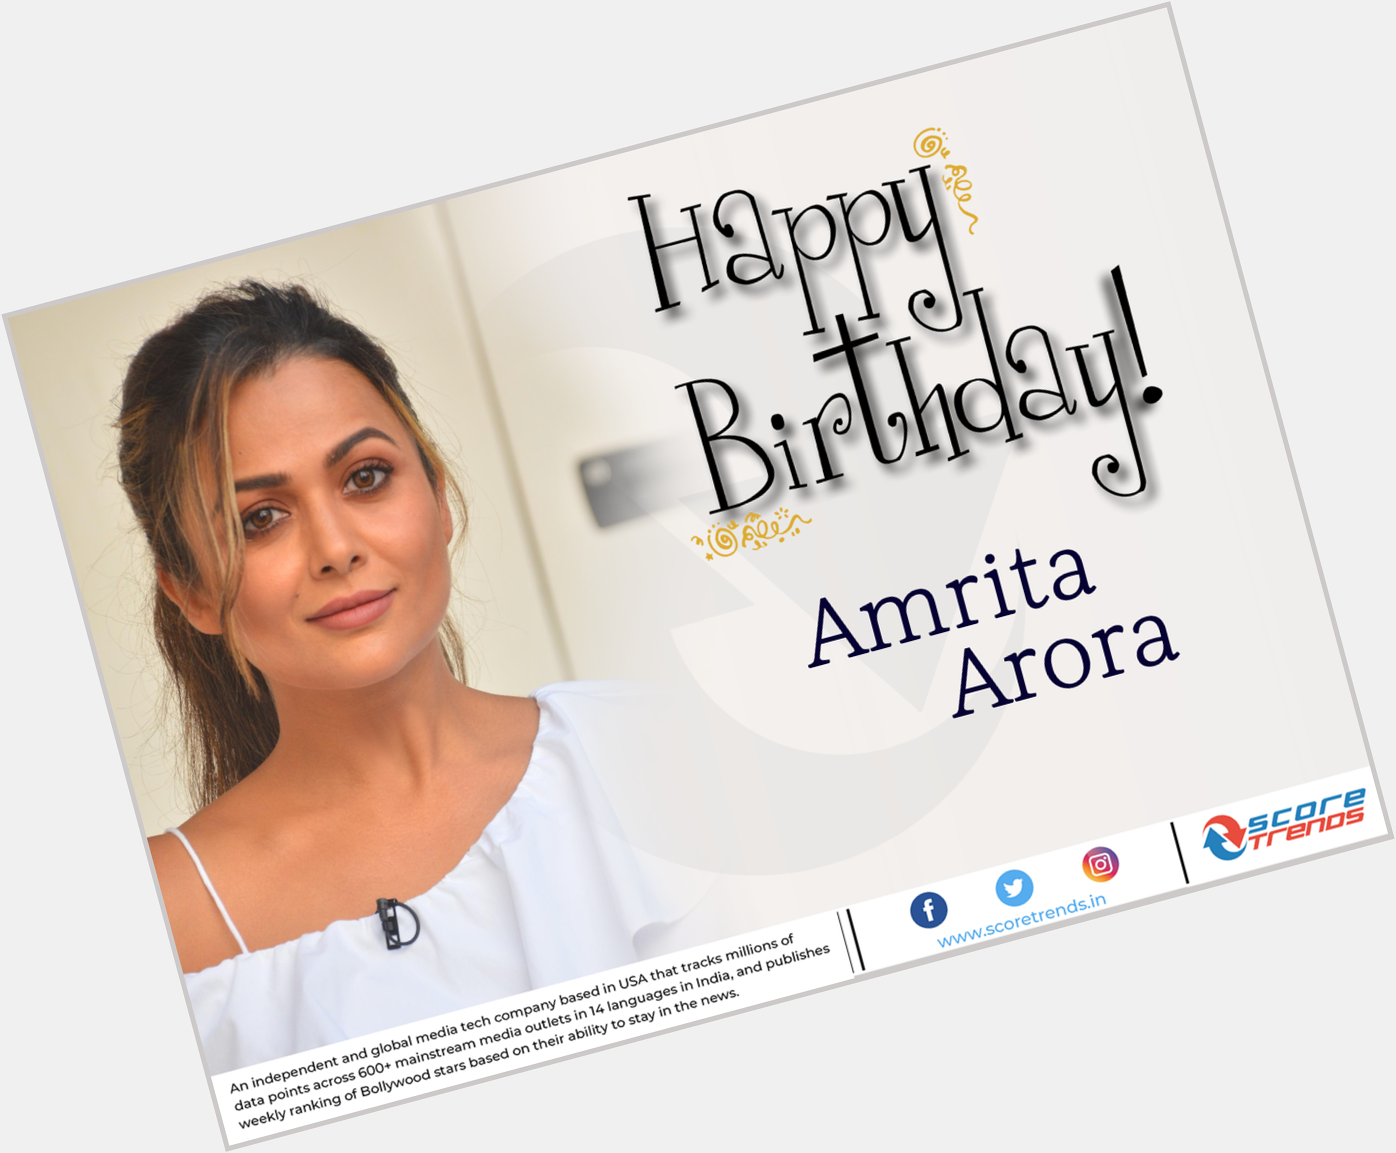 Score Trends wishes Amrita Arora a Happy Birthday!! 